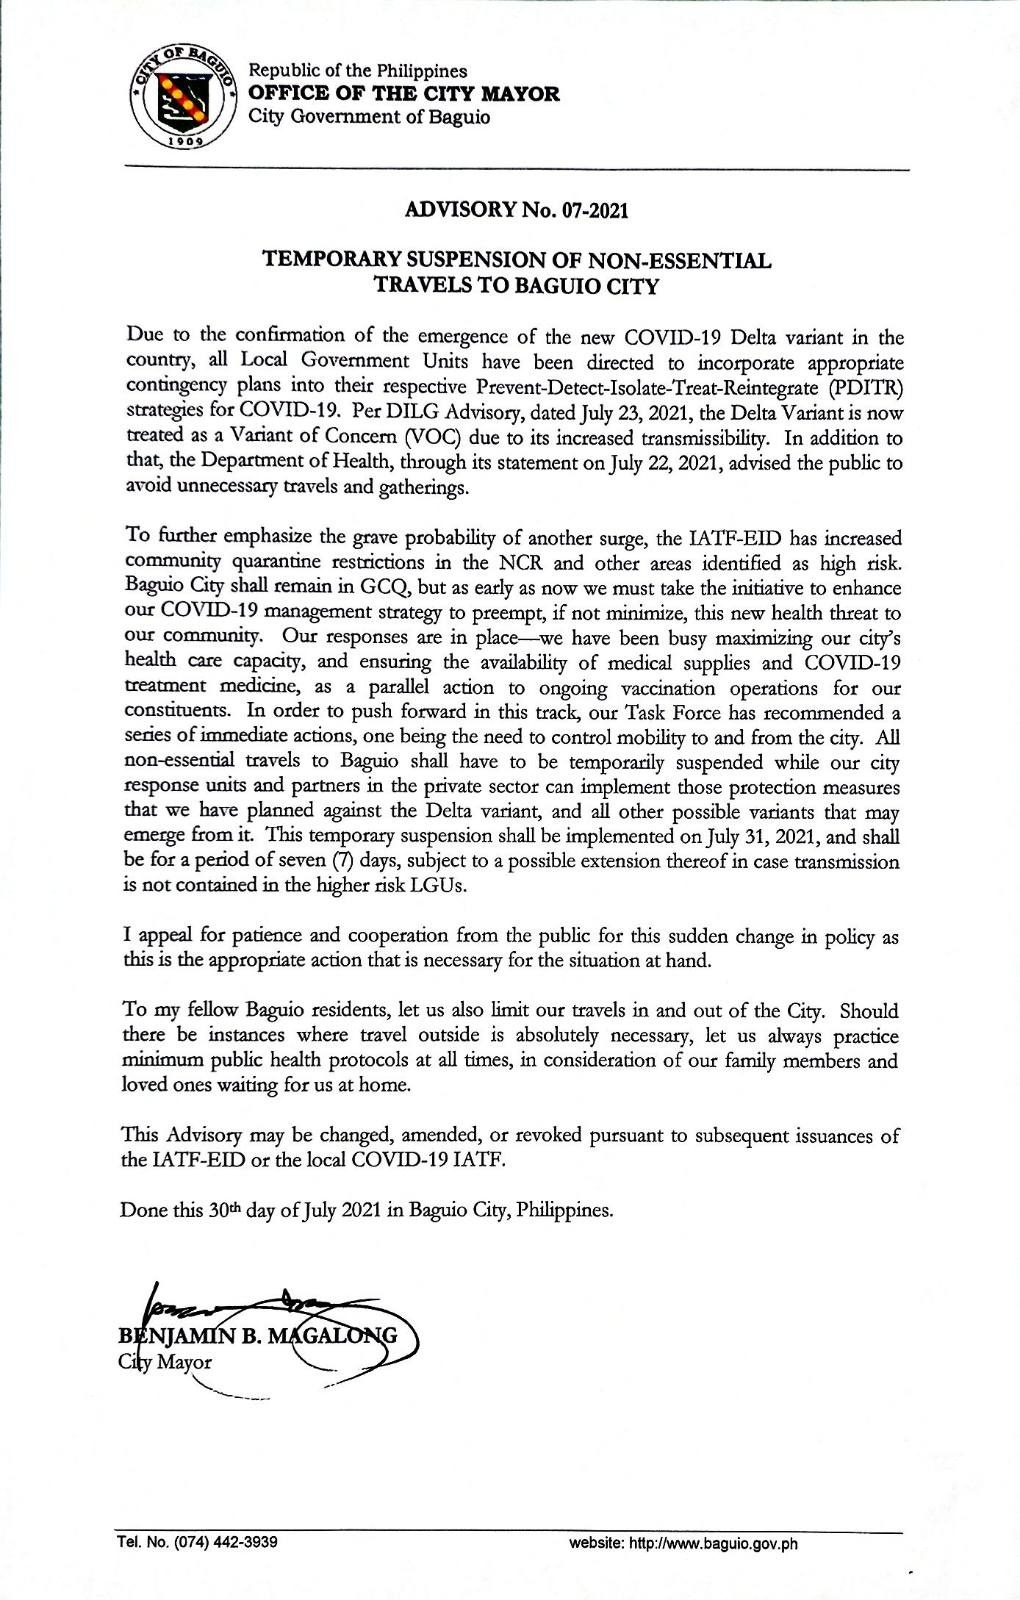 Baguio City advisory 07-2021